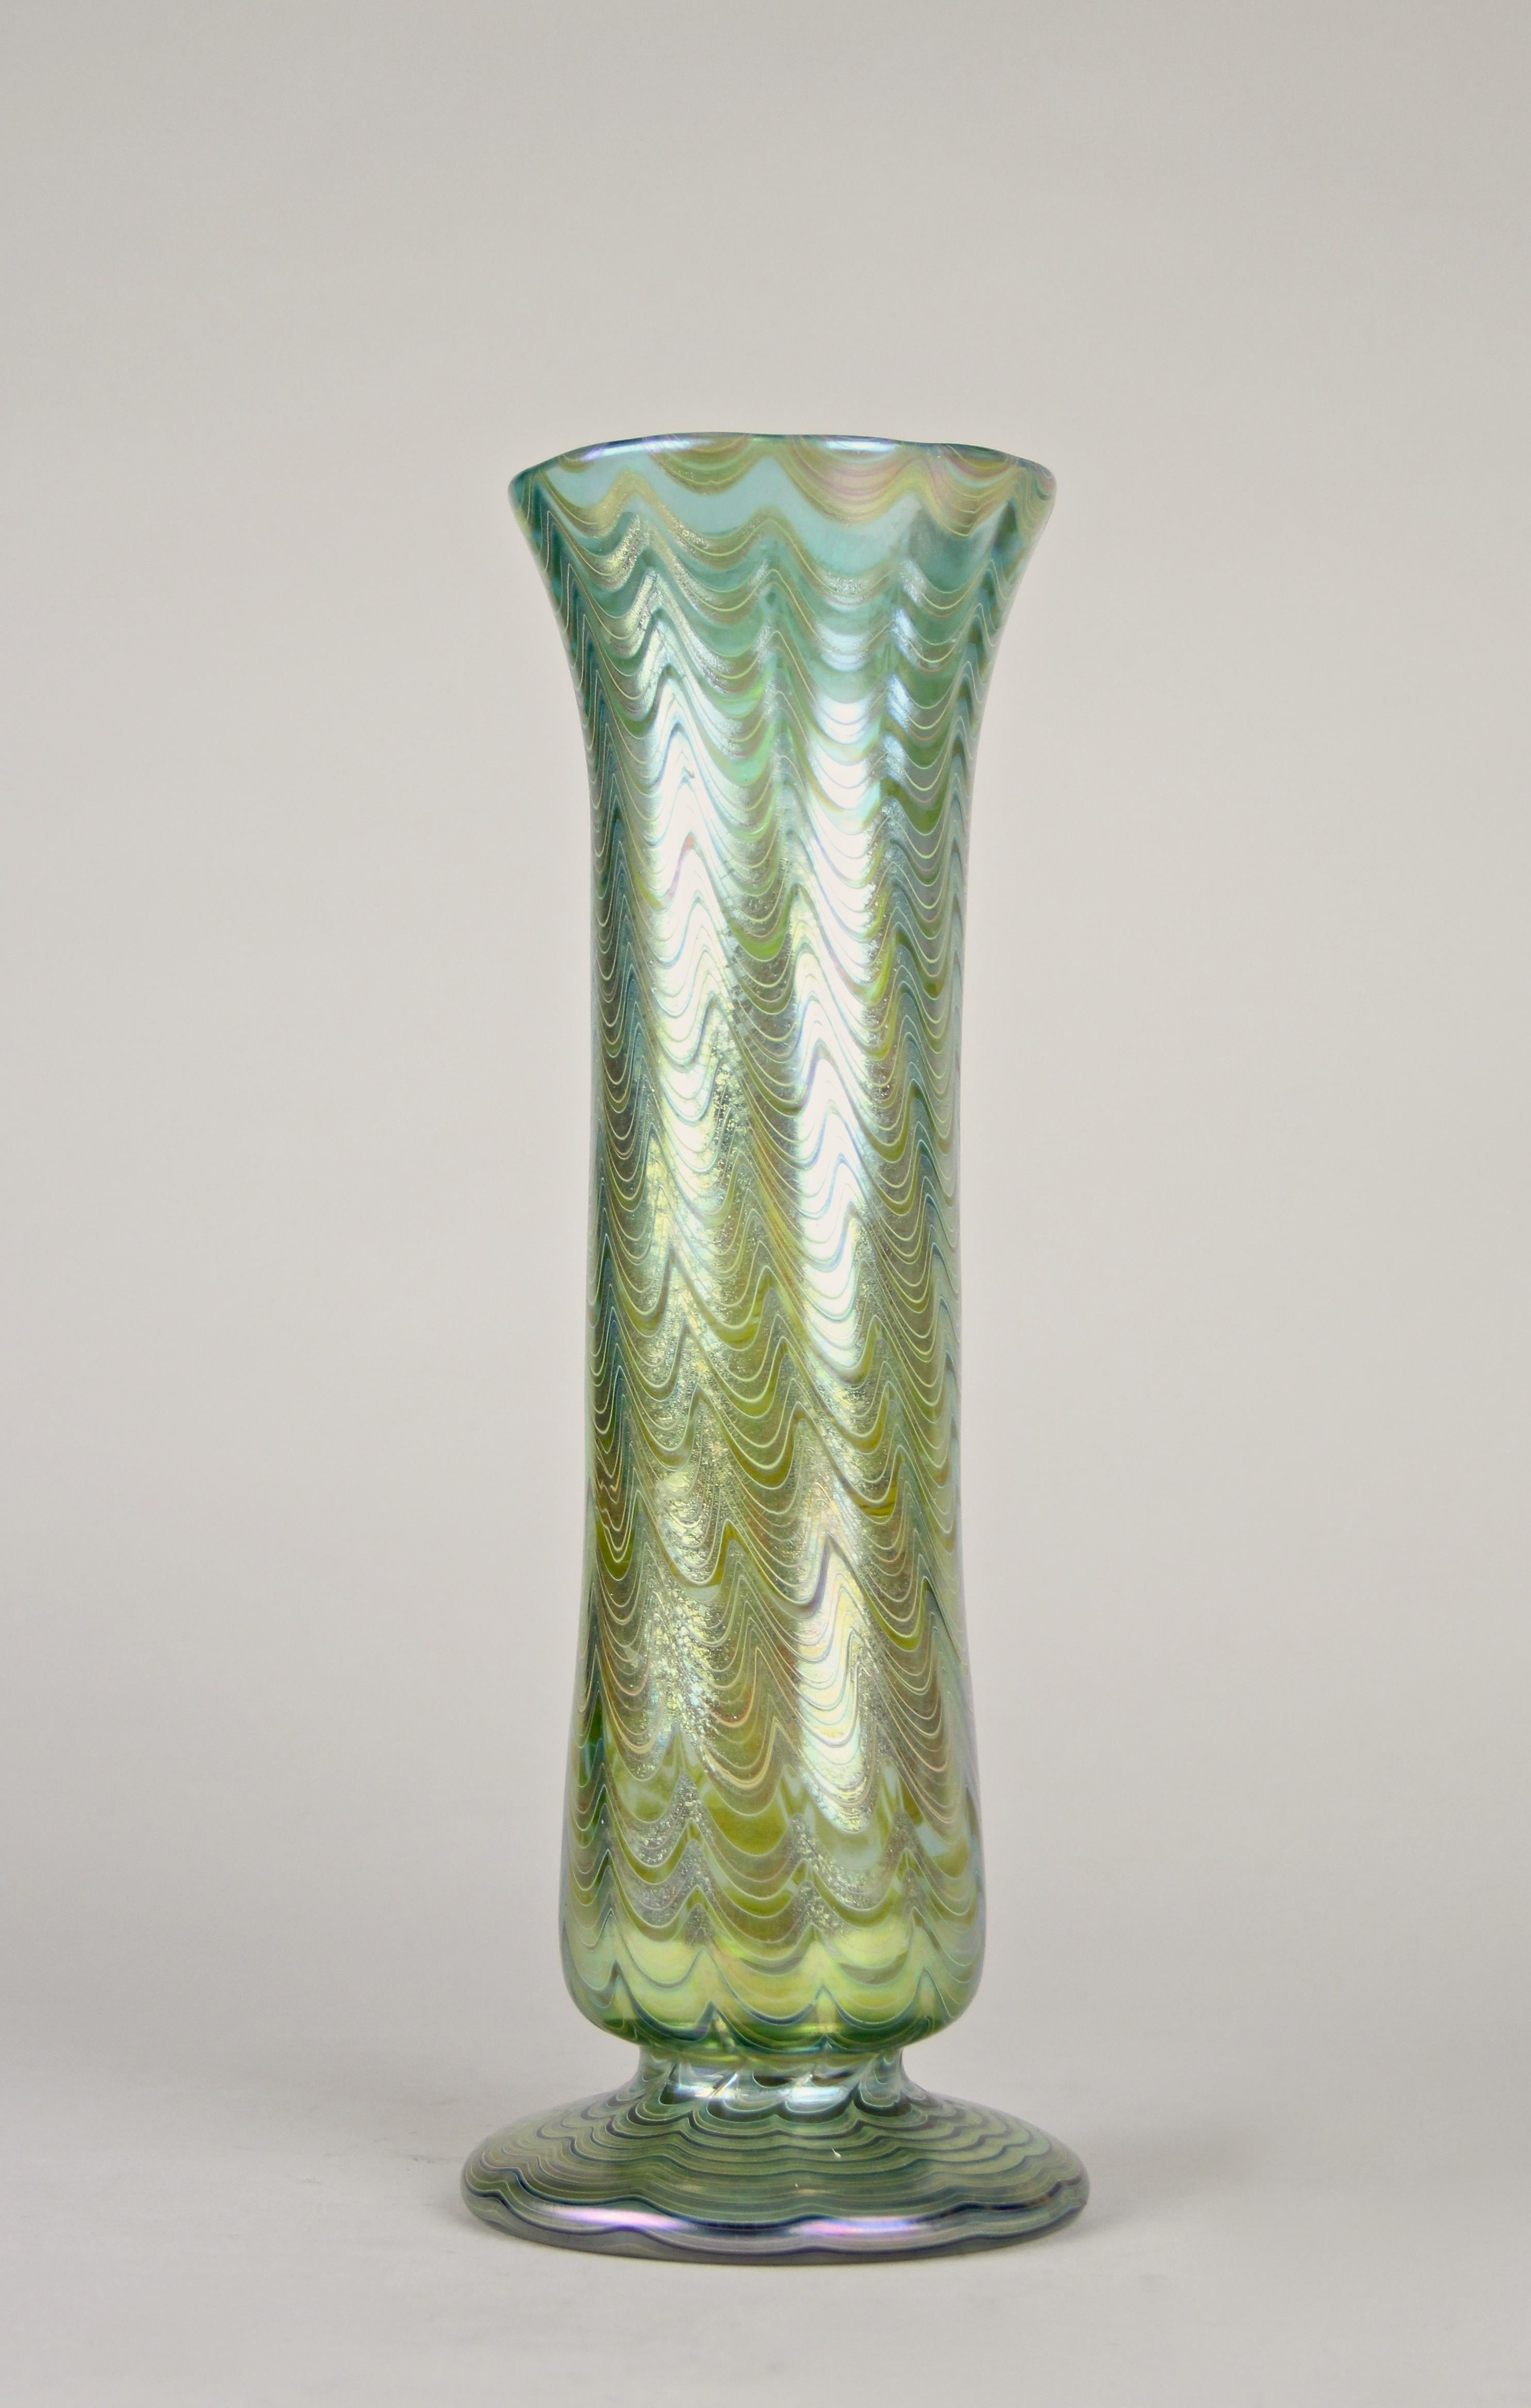 Art Nouveau Loetz Witwe Glass Vase Phaenomen Genre 6893 Green, Bohemia, circa 1899 For Sale